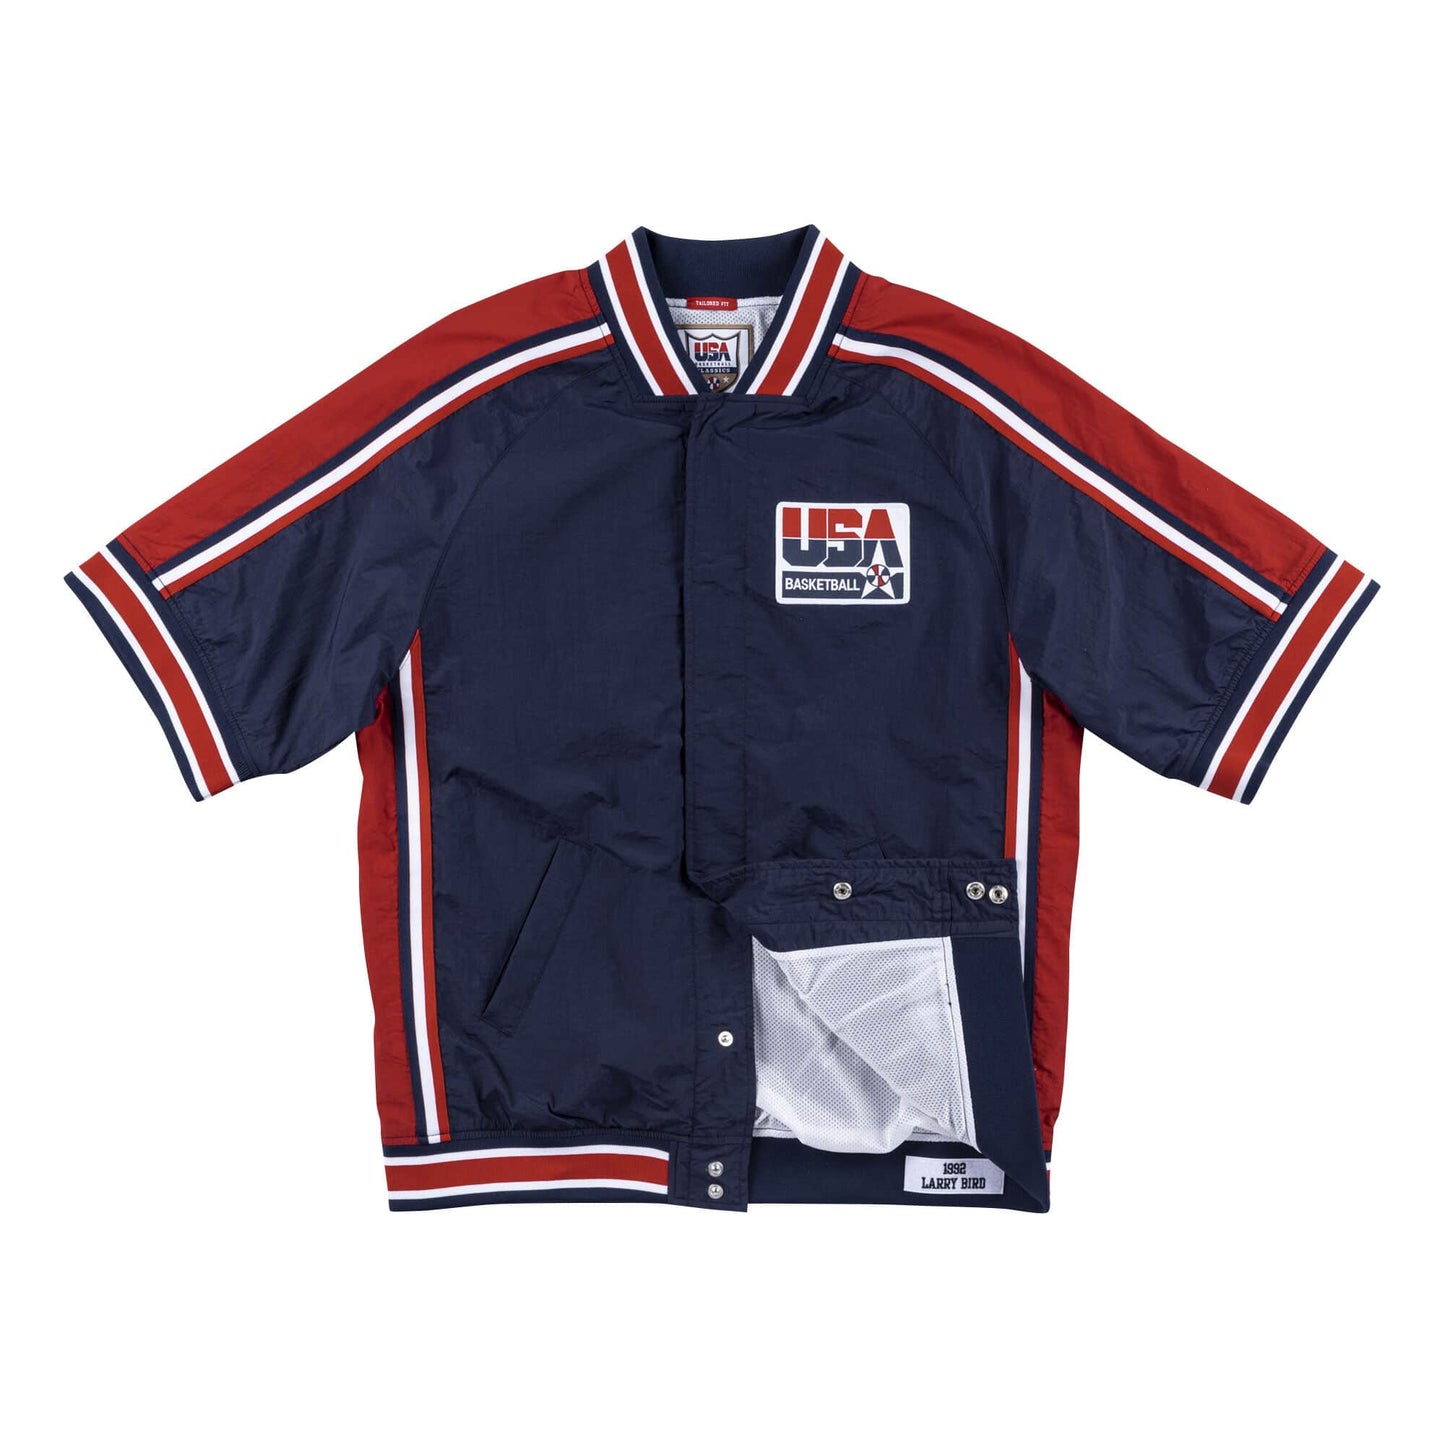 Authentic Warm Up Jacket Team USA 1992 Larry Bird